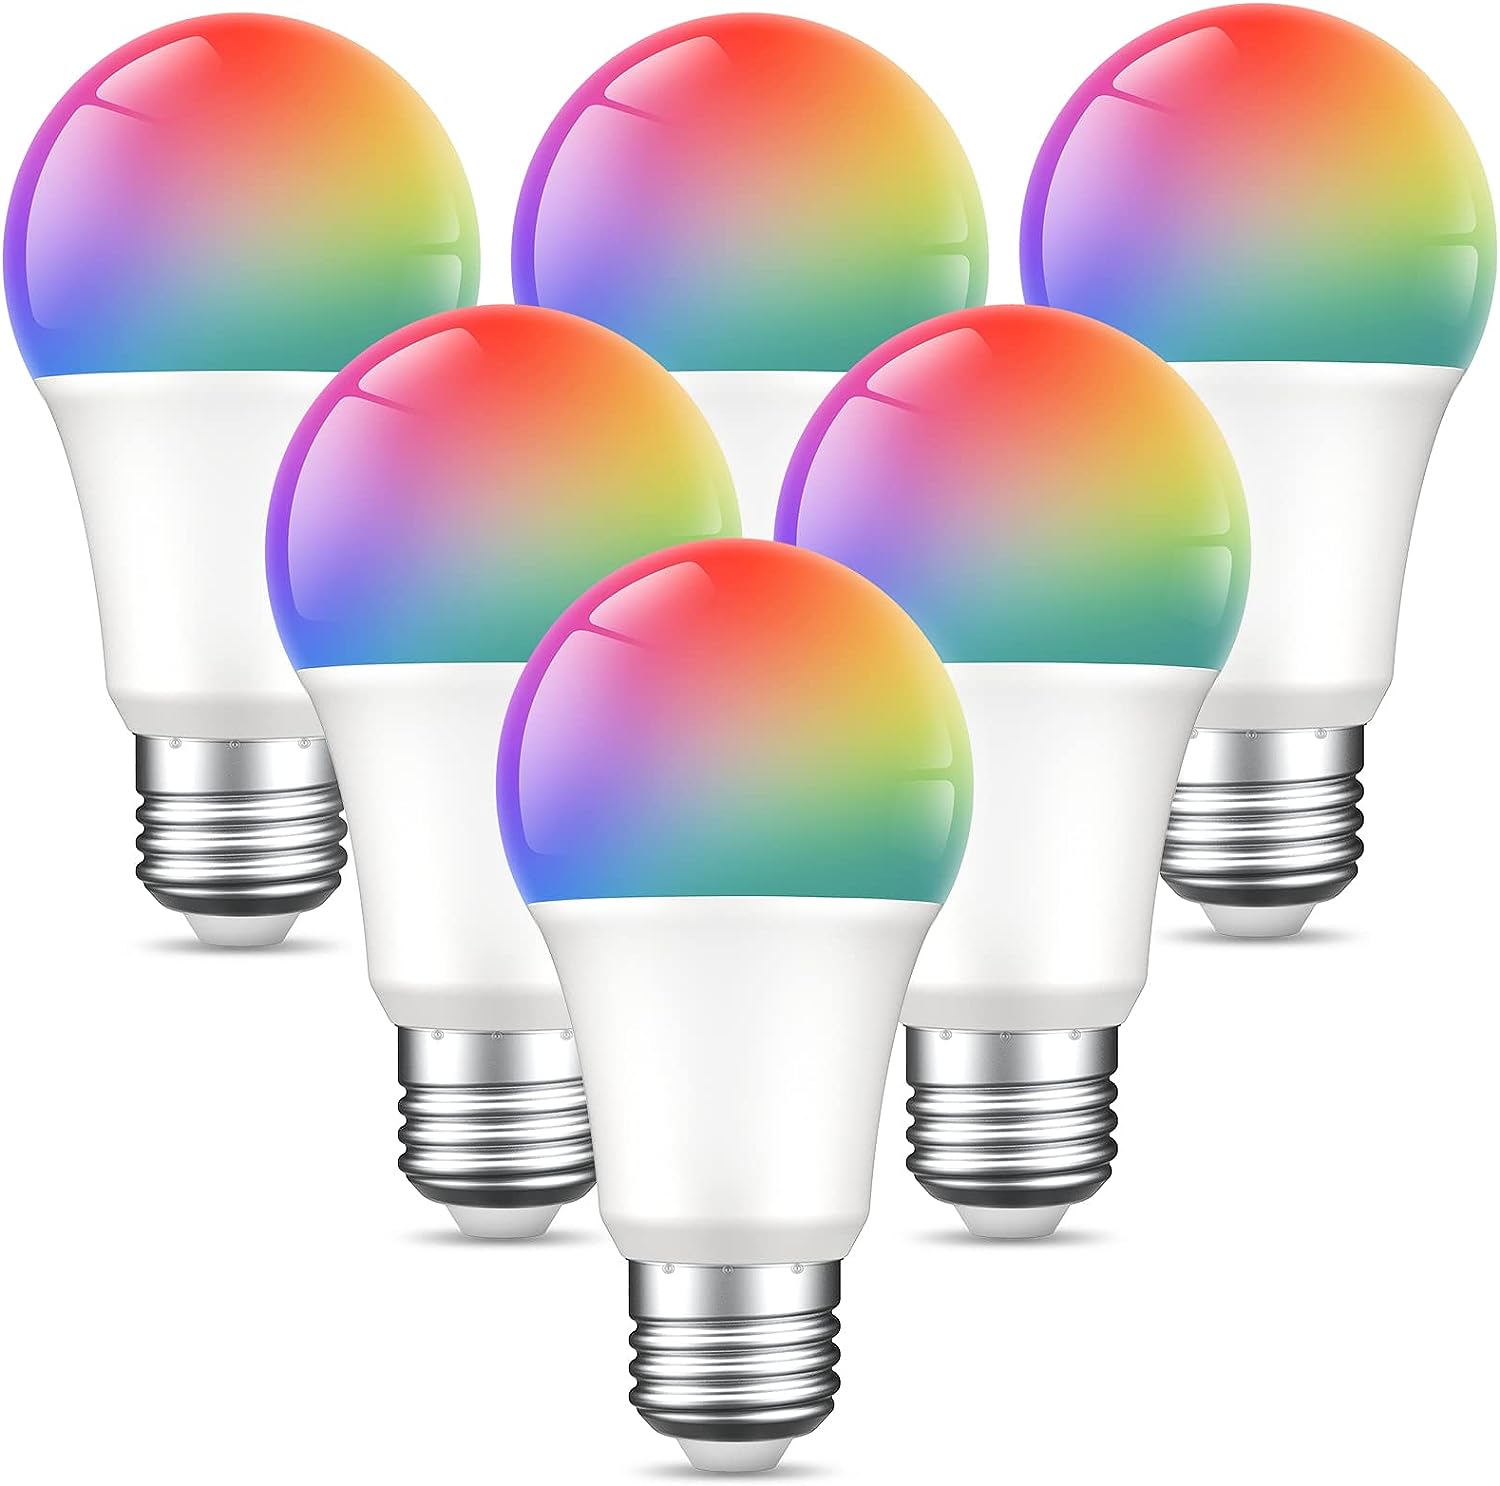 Ghome Smart Light Bulbs